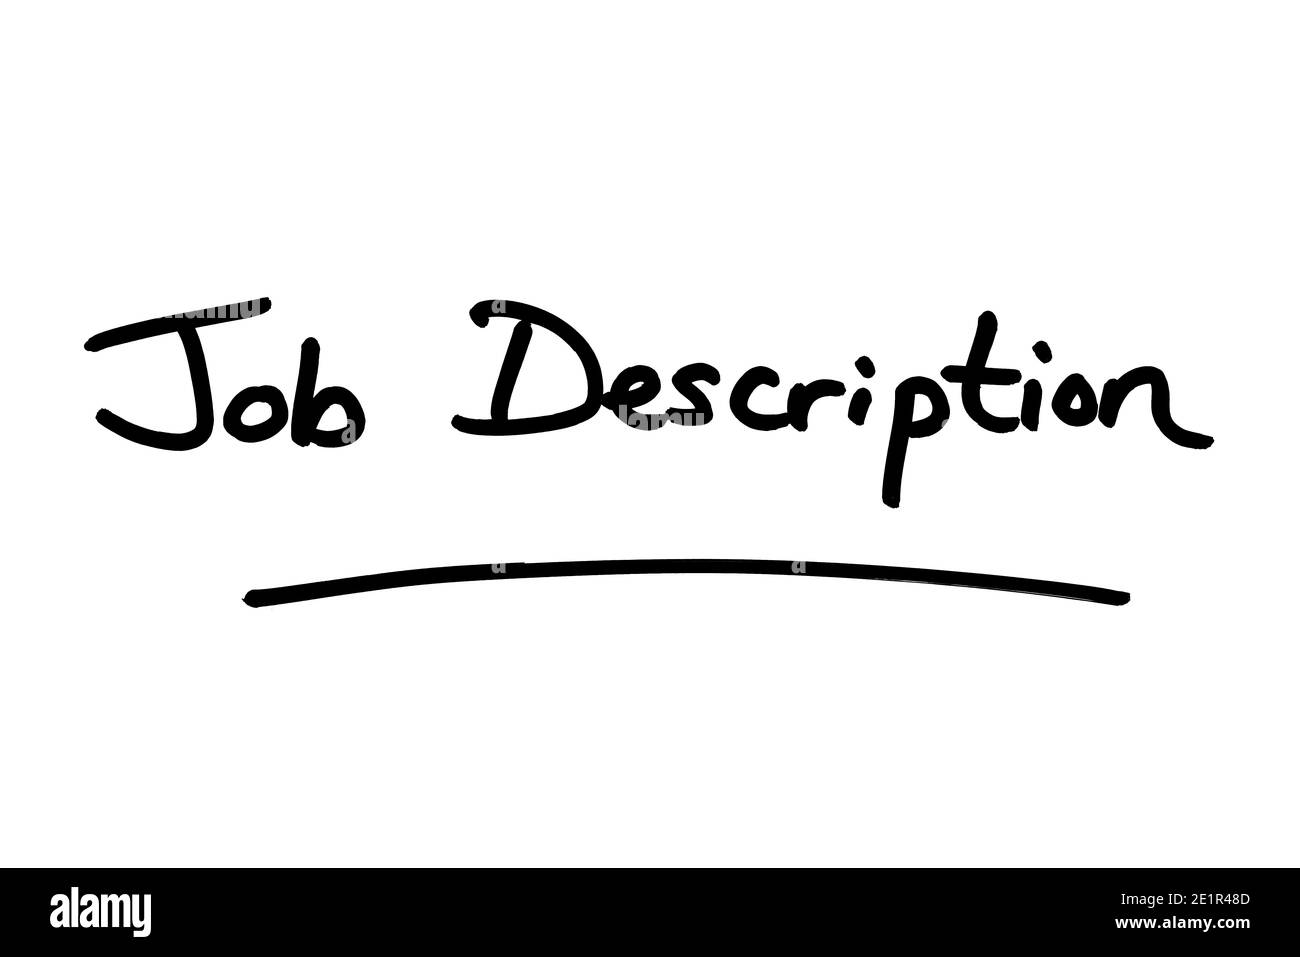 Job Description handwritten on a white background. Stock Photo